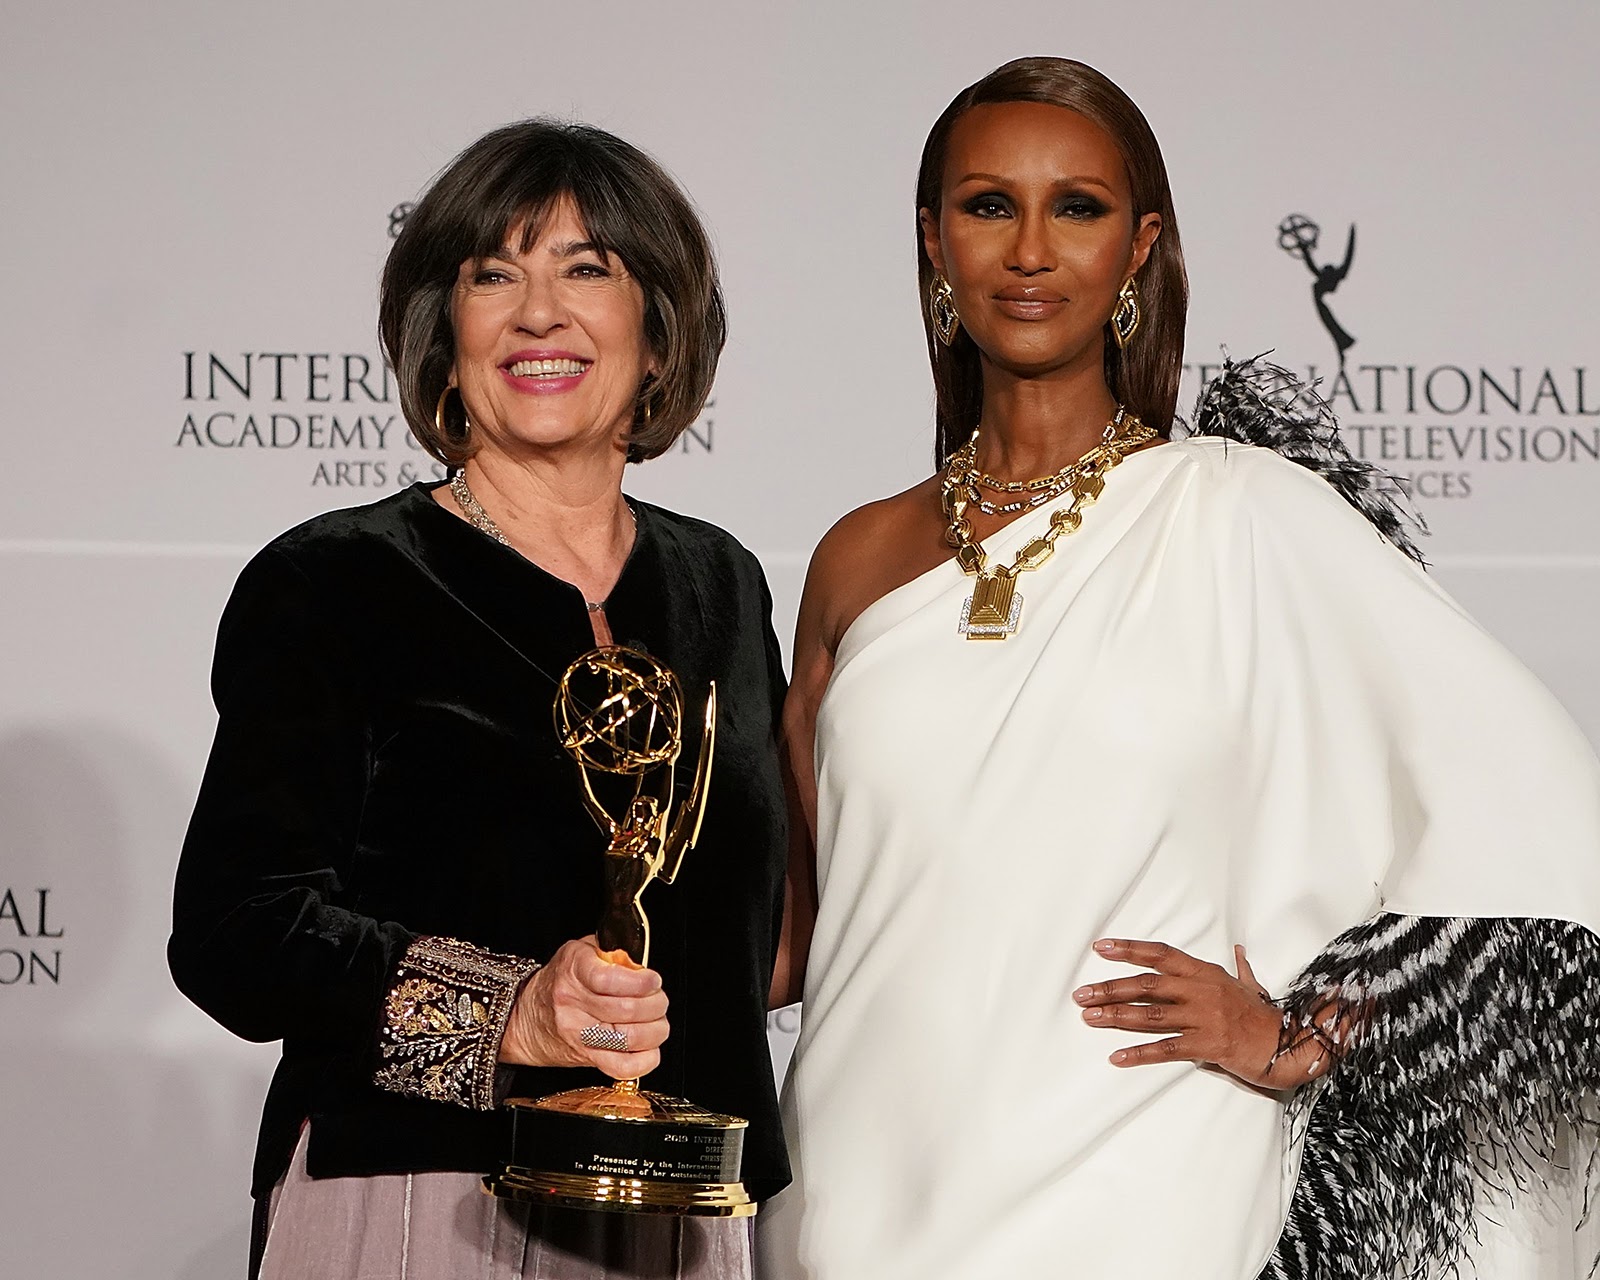 2019 International Emmy Directorate Award recipient Christiane Amanpour with Iman